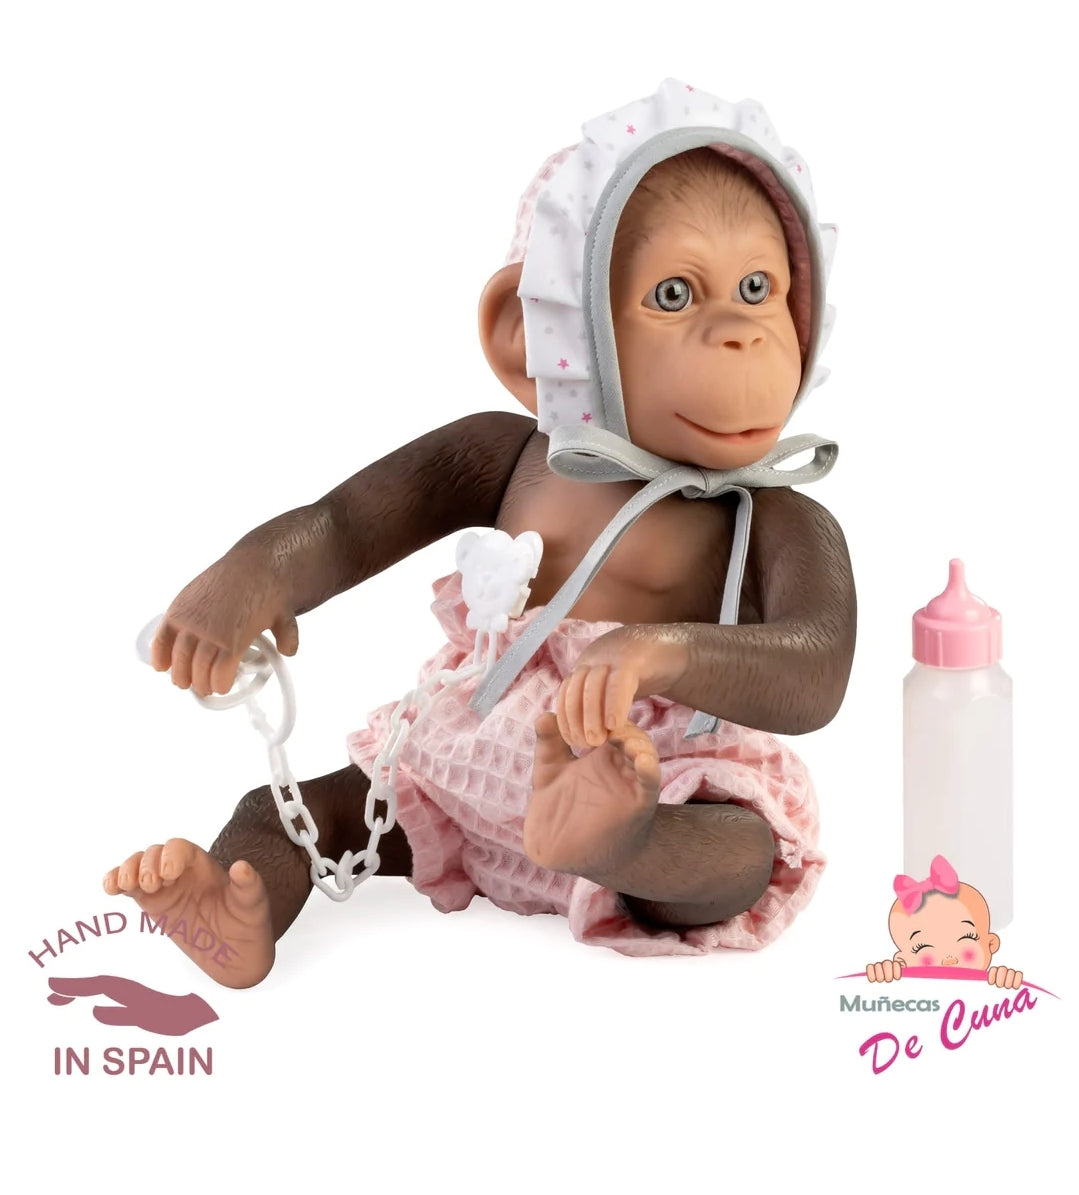 Spanish Baby Lola Reborn Monkey Doll 020203 - IN STOCK NOW